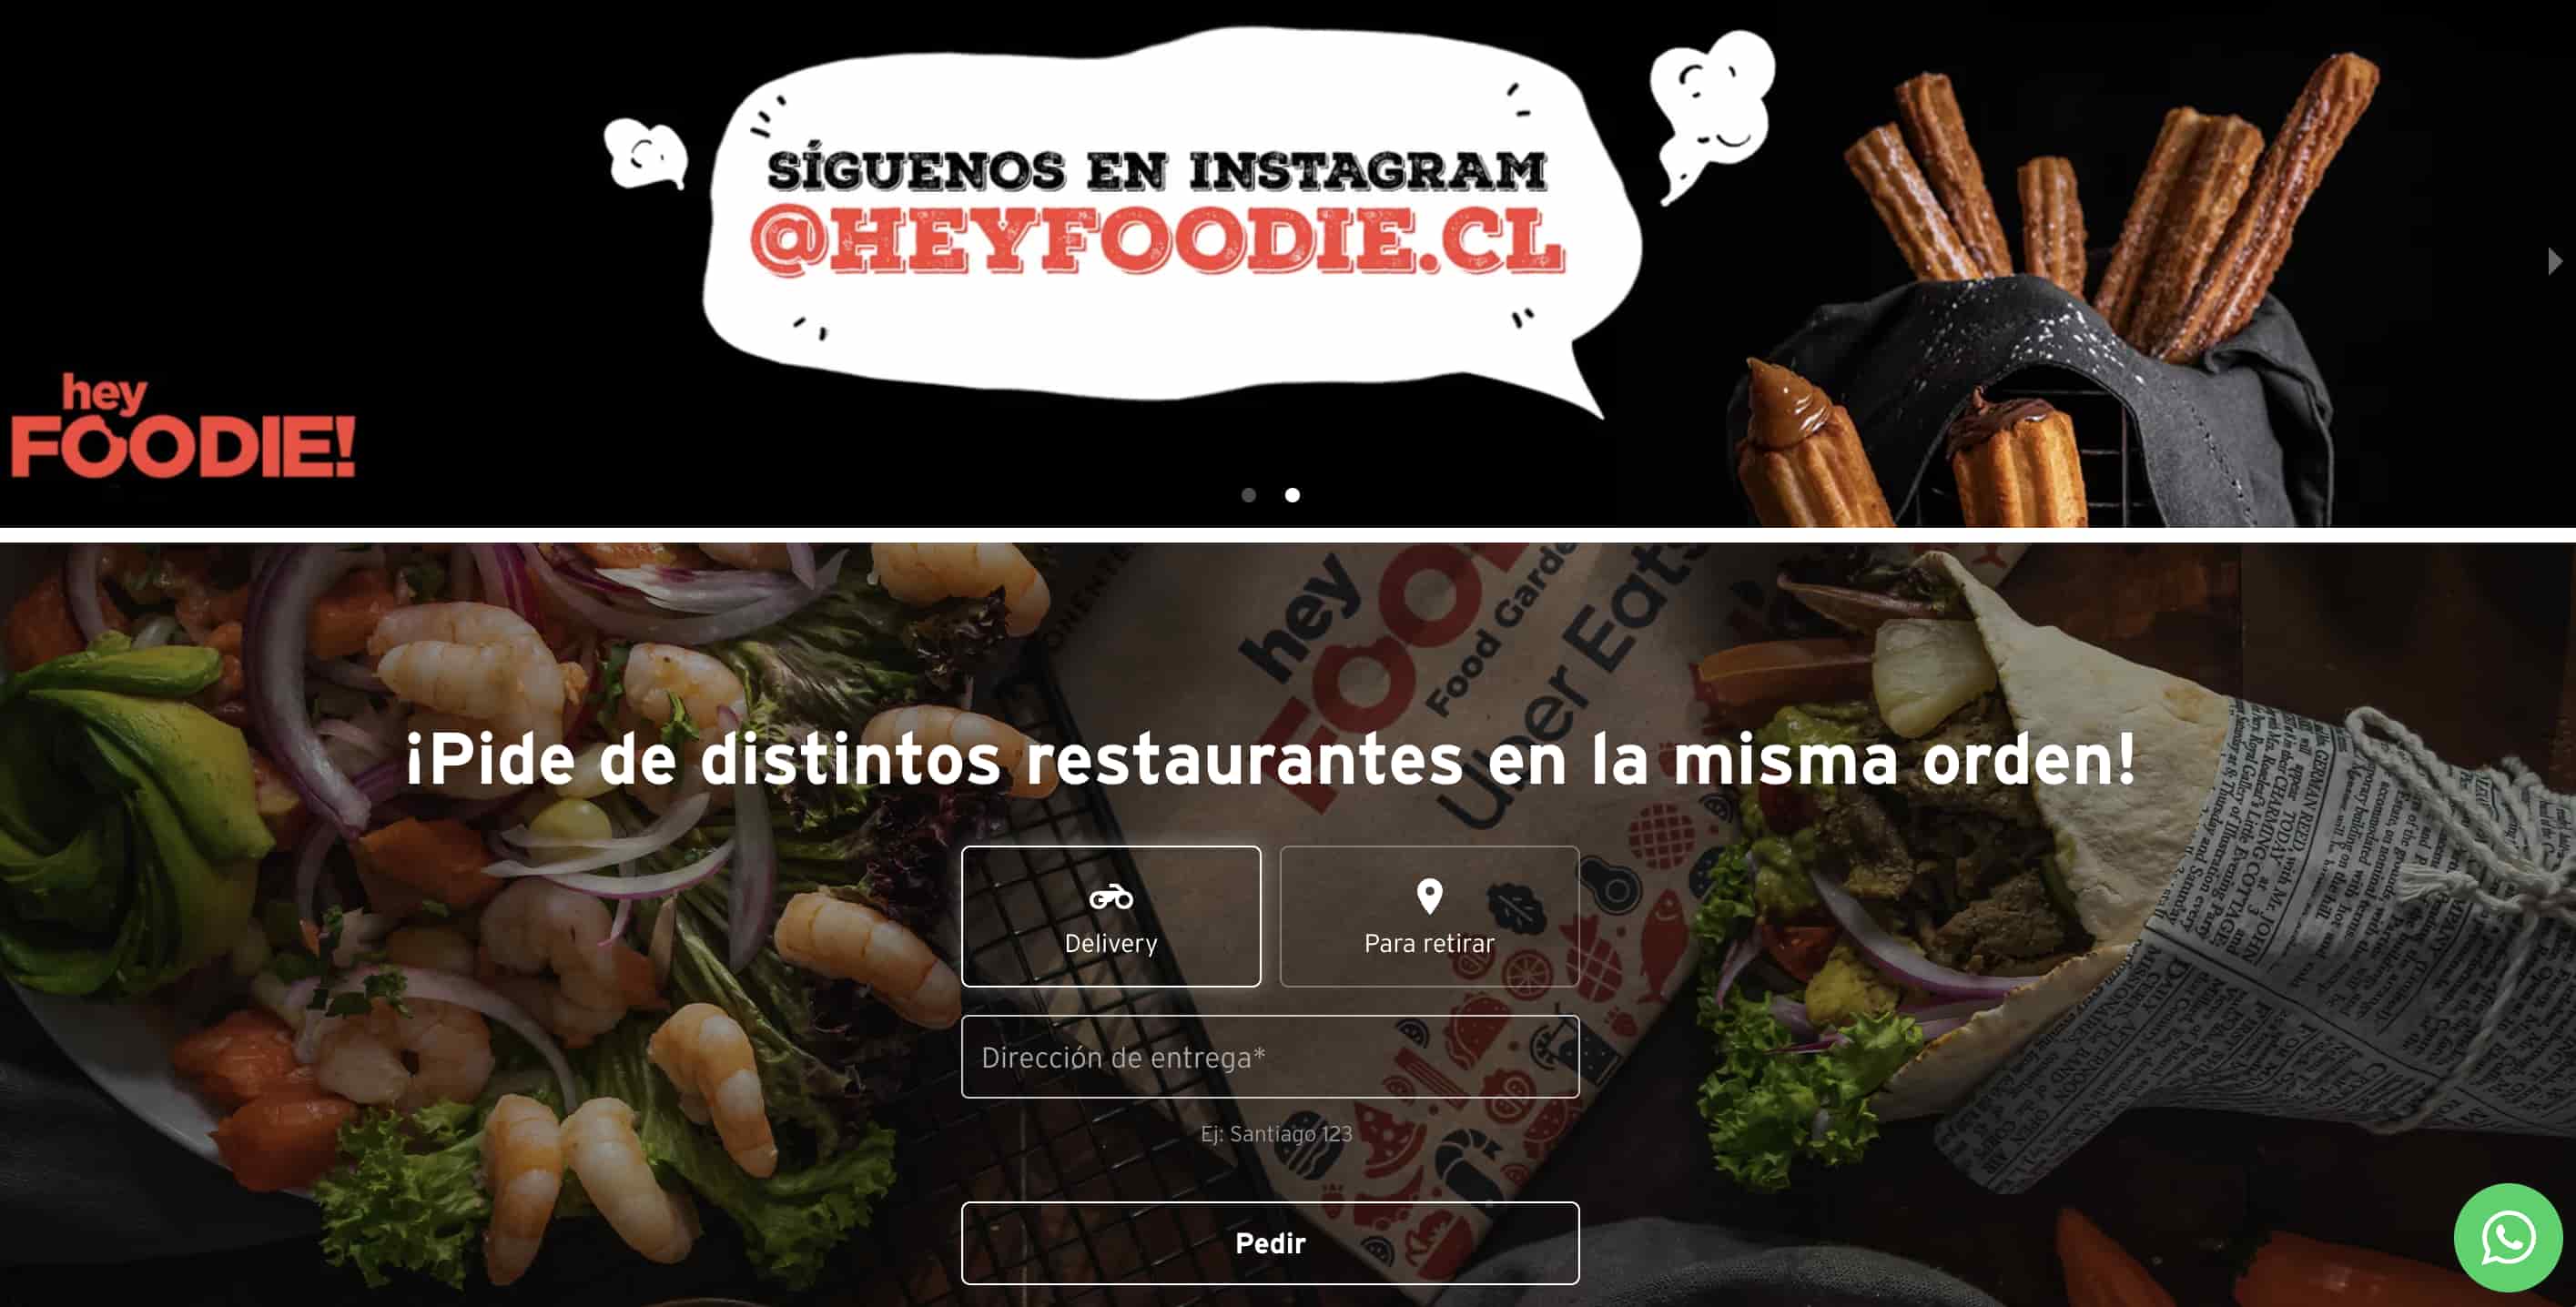 Ejemplo de pymes en Chile: Hey Foodie!